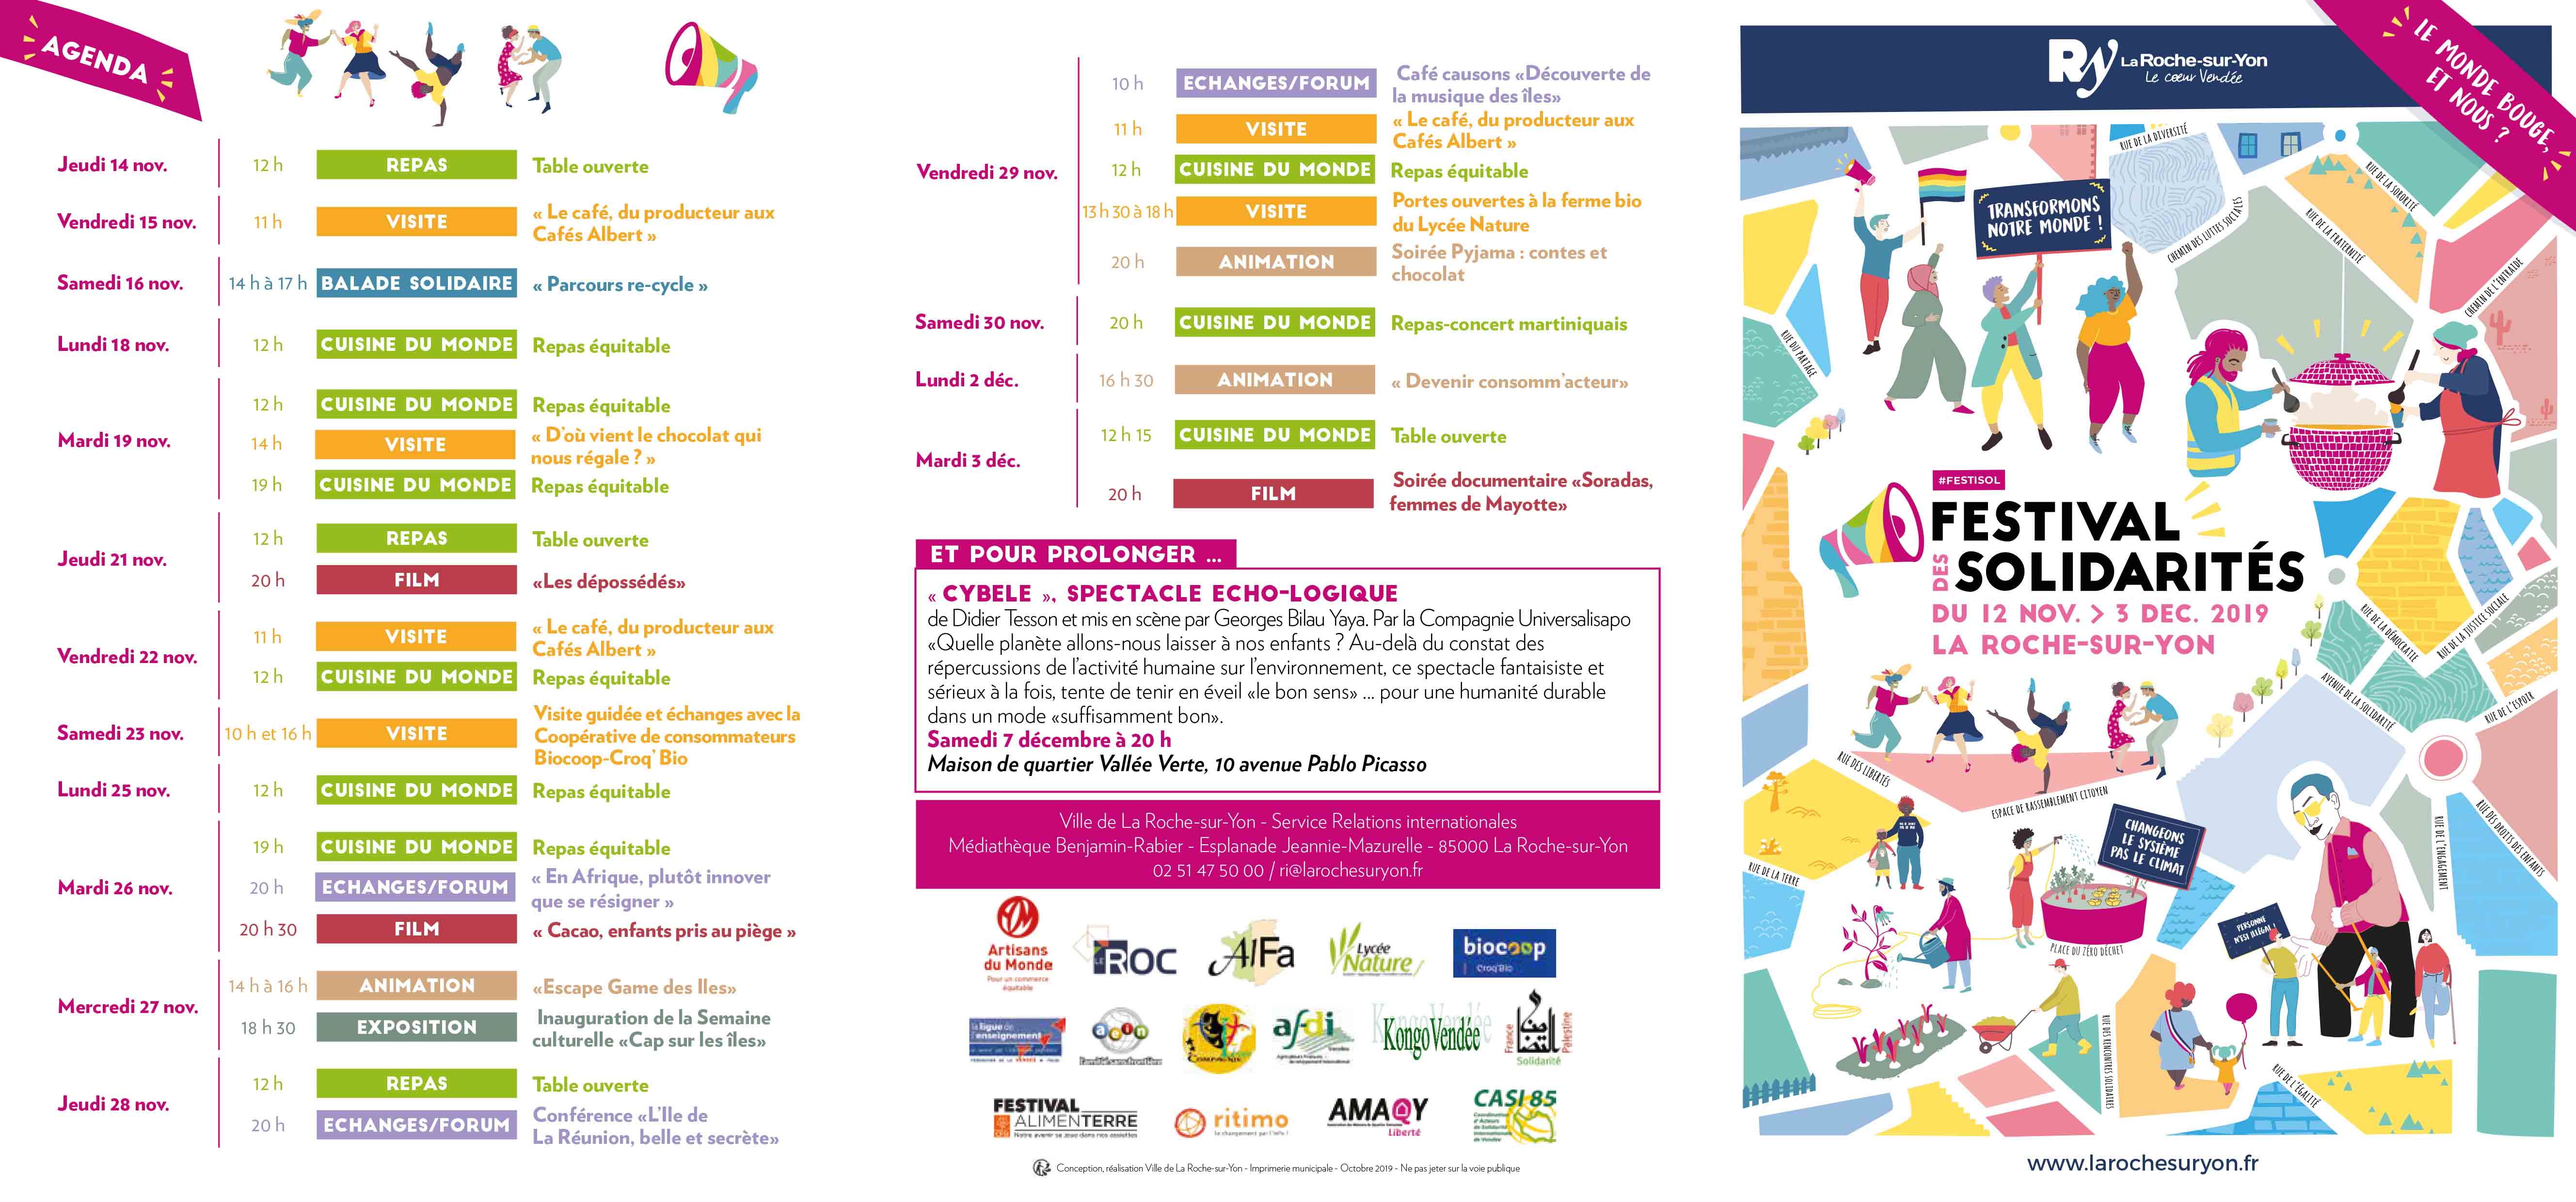 Programme flyer Festival solidarites LRSY 2019 2